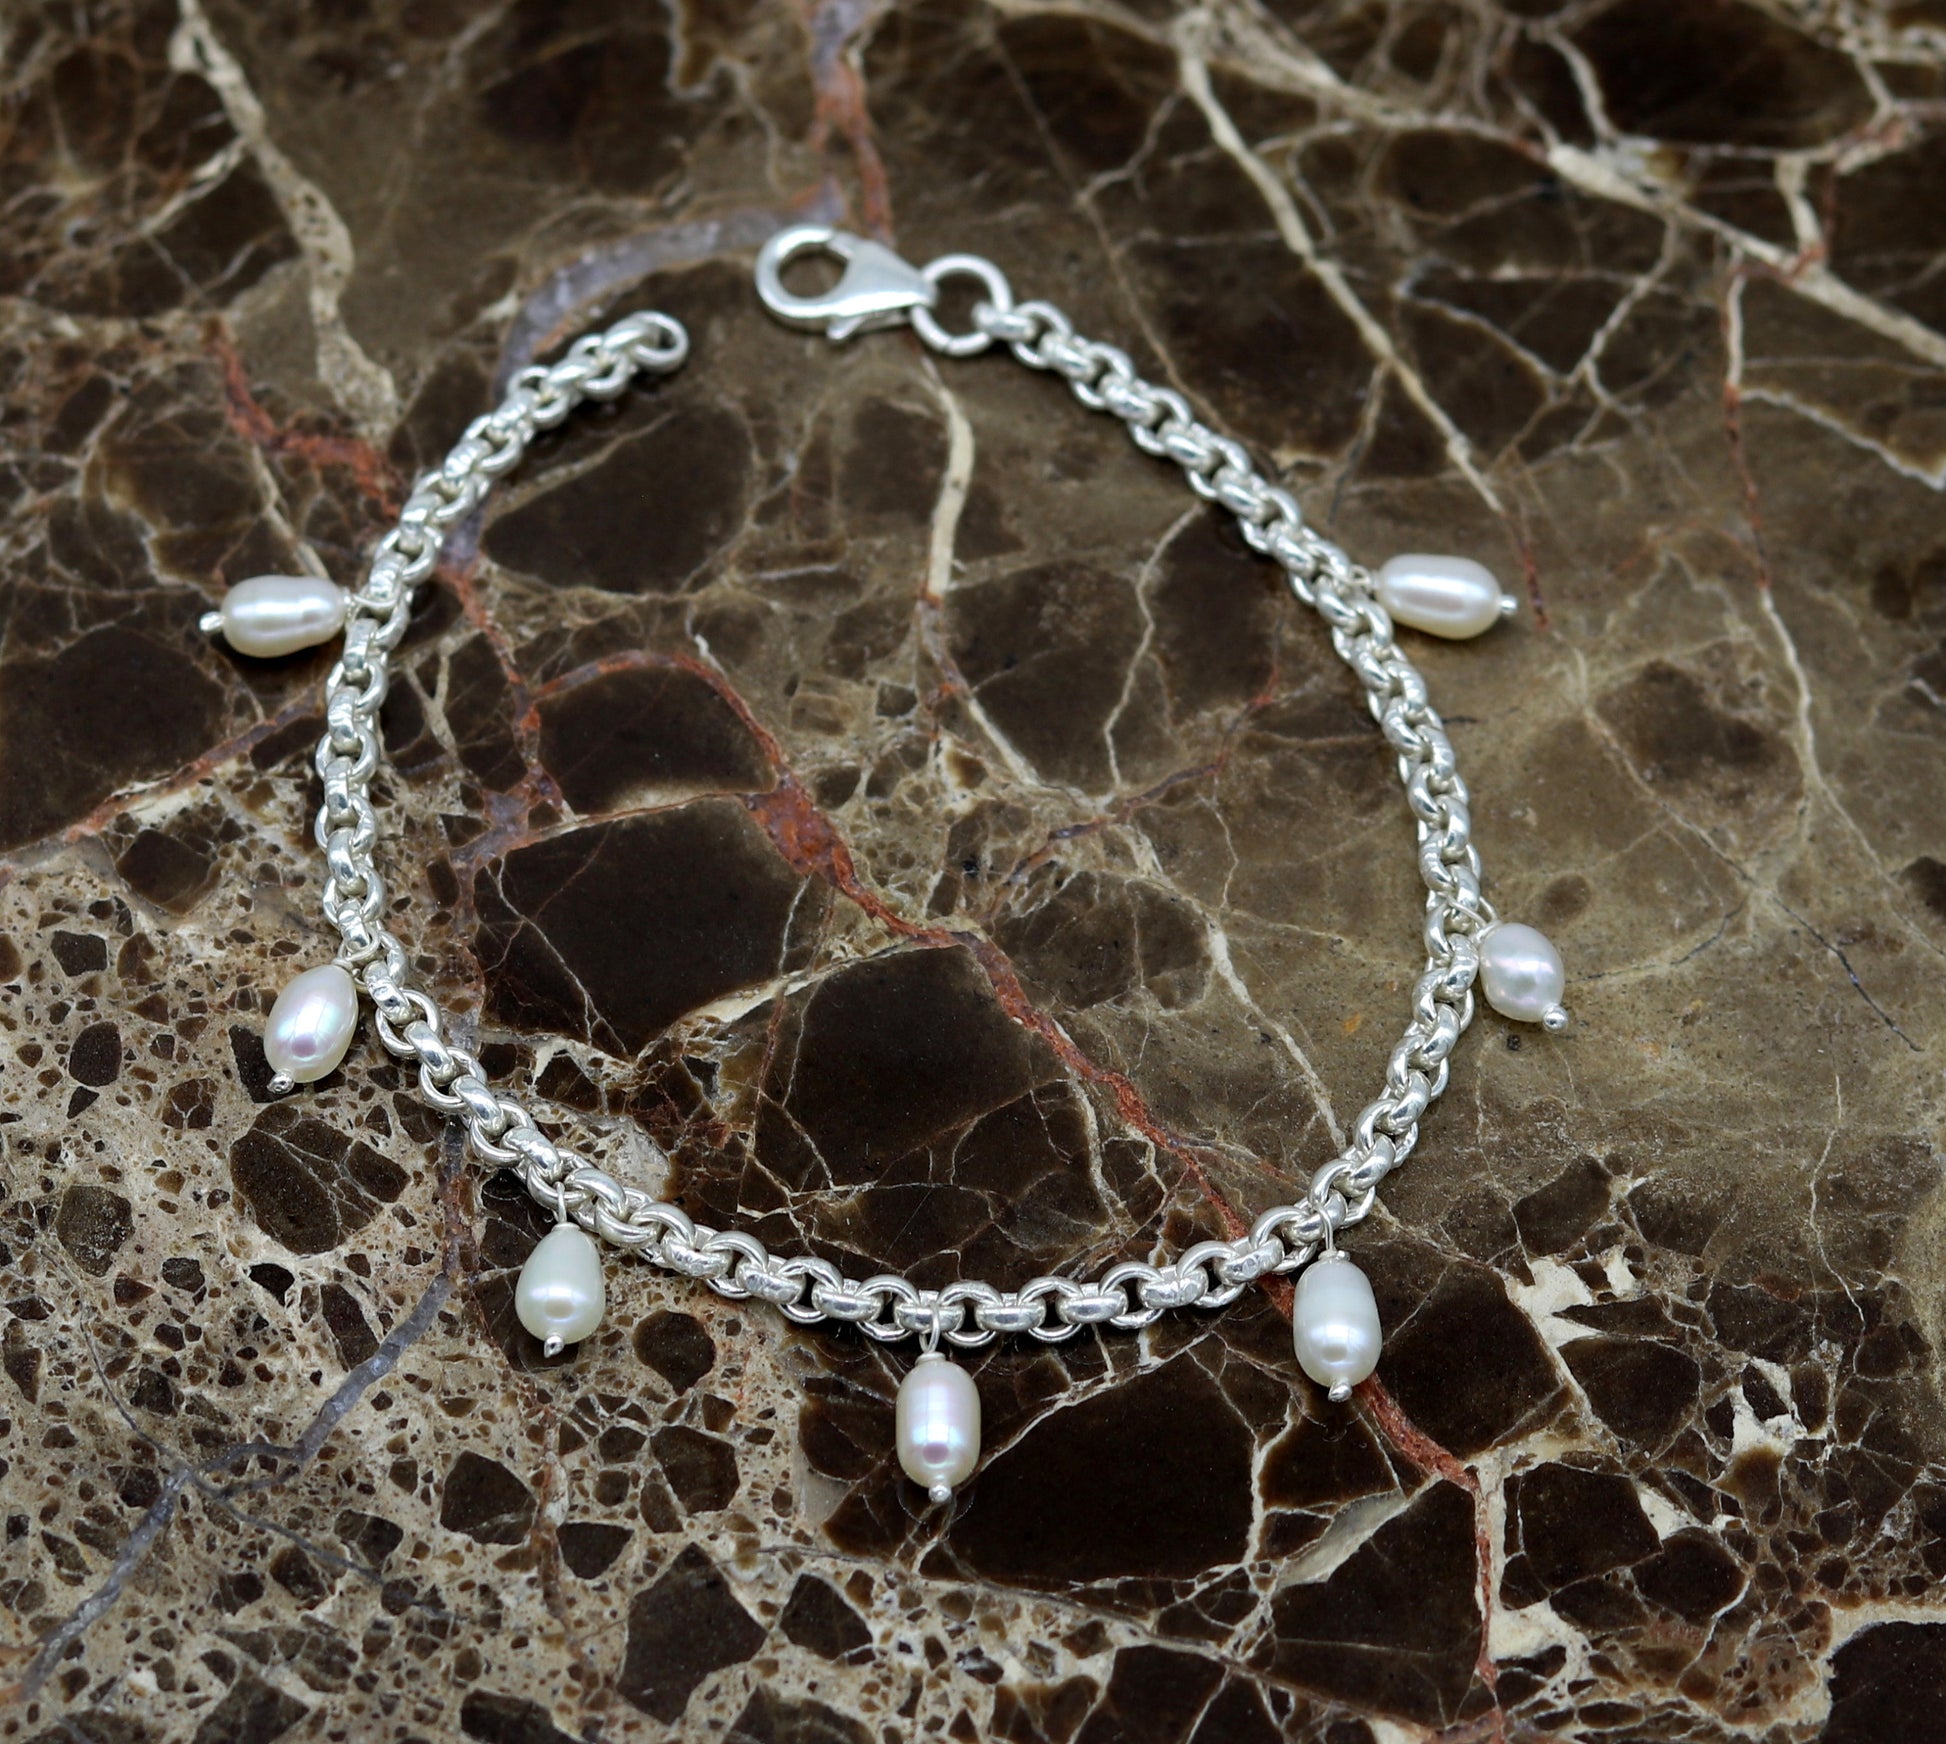 7.5" 925 sterling silver handmade customized charm bracelet, stylish pearl bracelet unisex gifting jewelry belly dance jewelry nsbr191 - TRIBAL ORNAMENTS